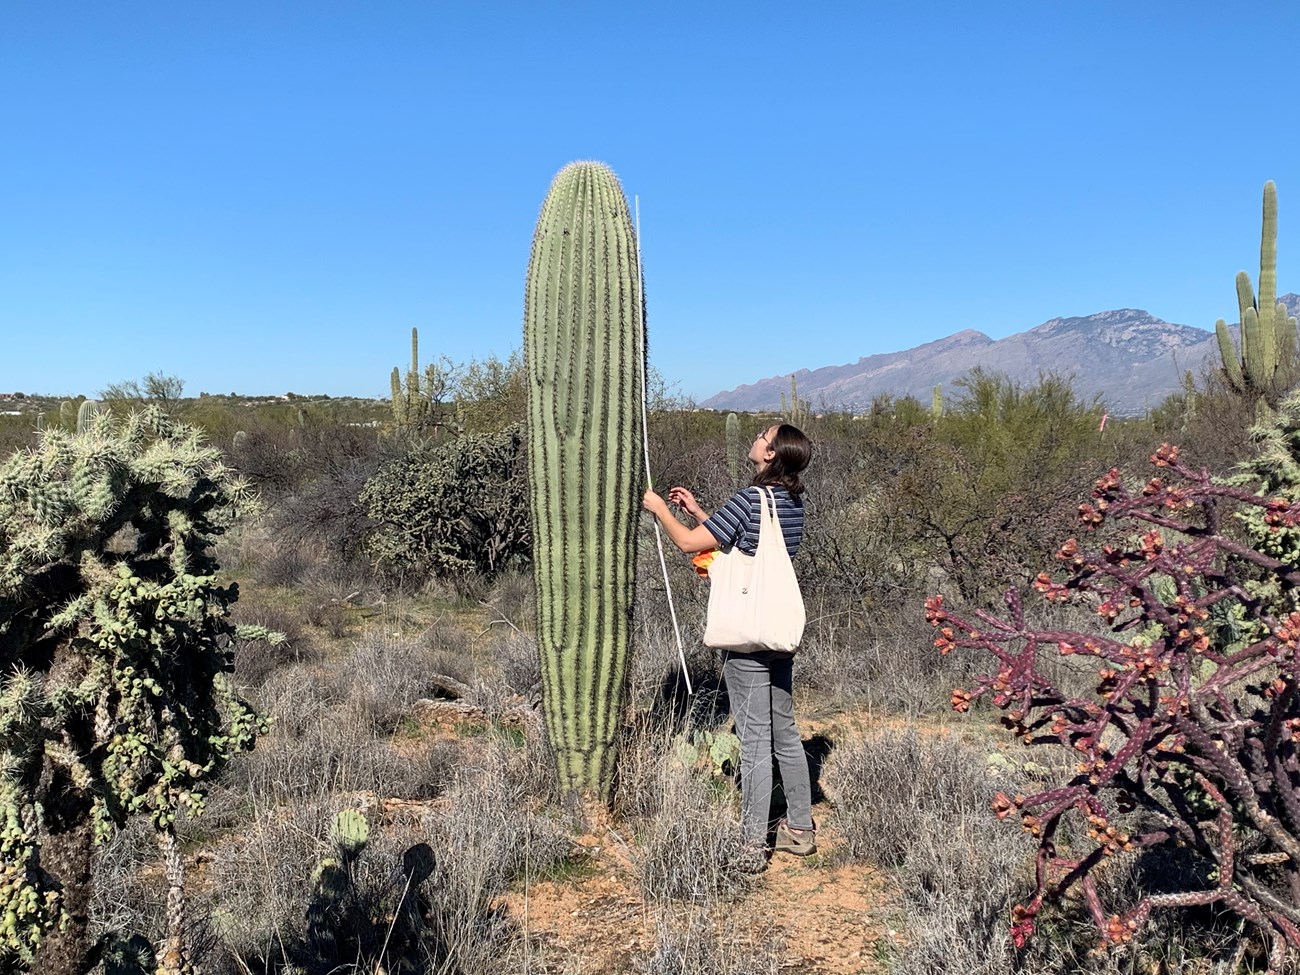 Student measures saguaro height